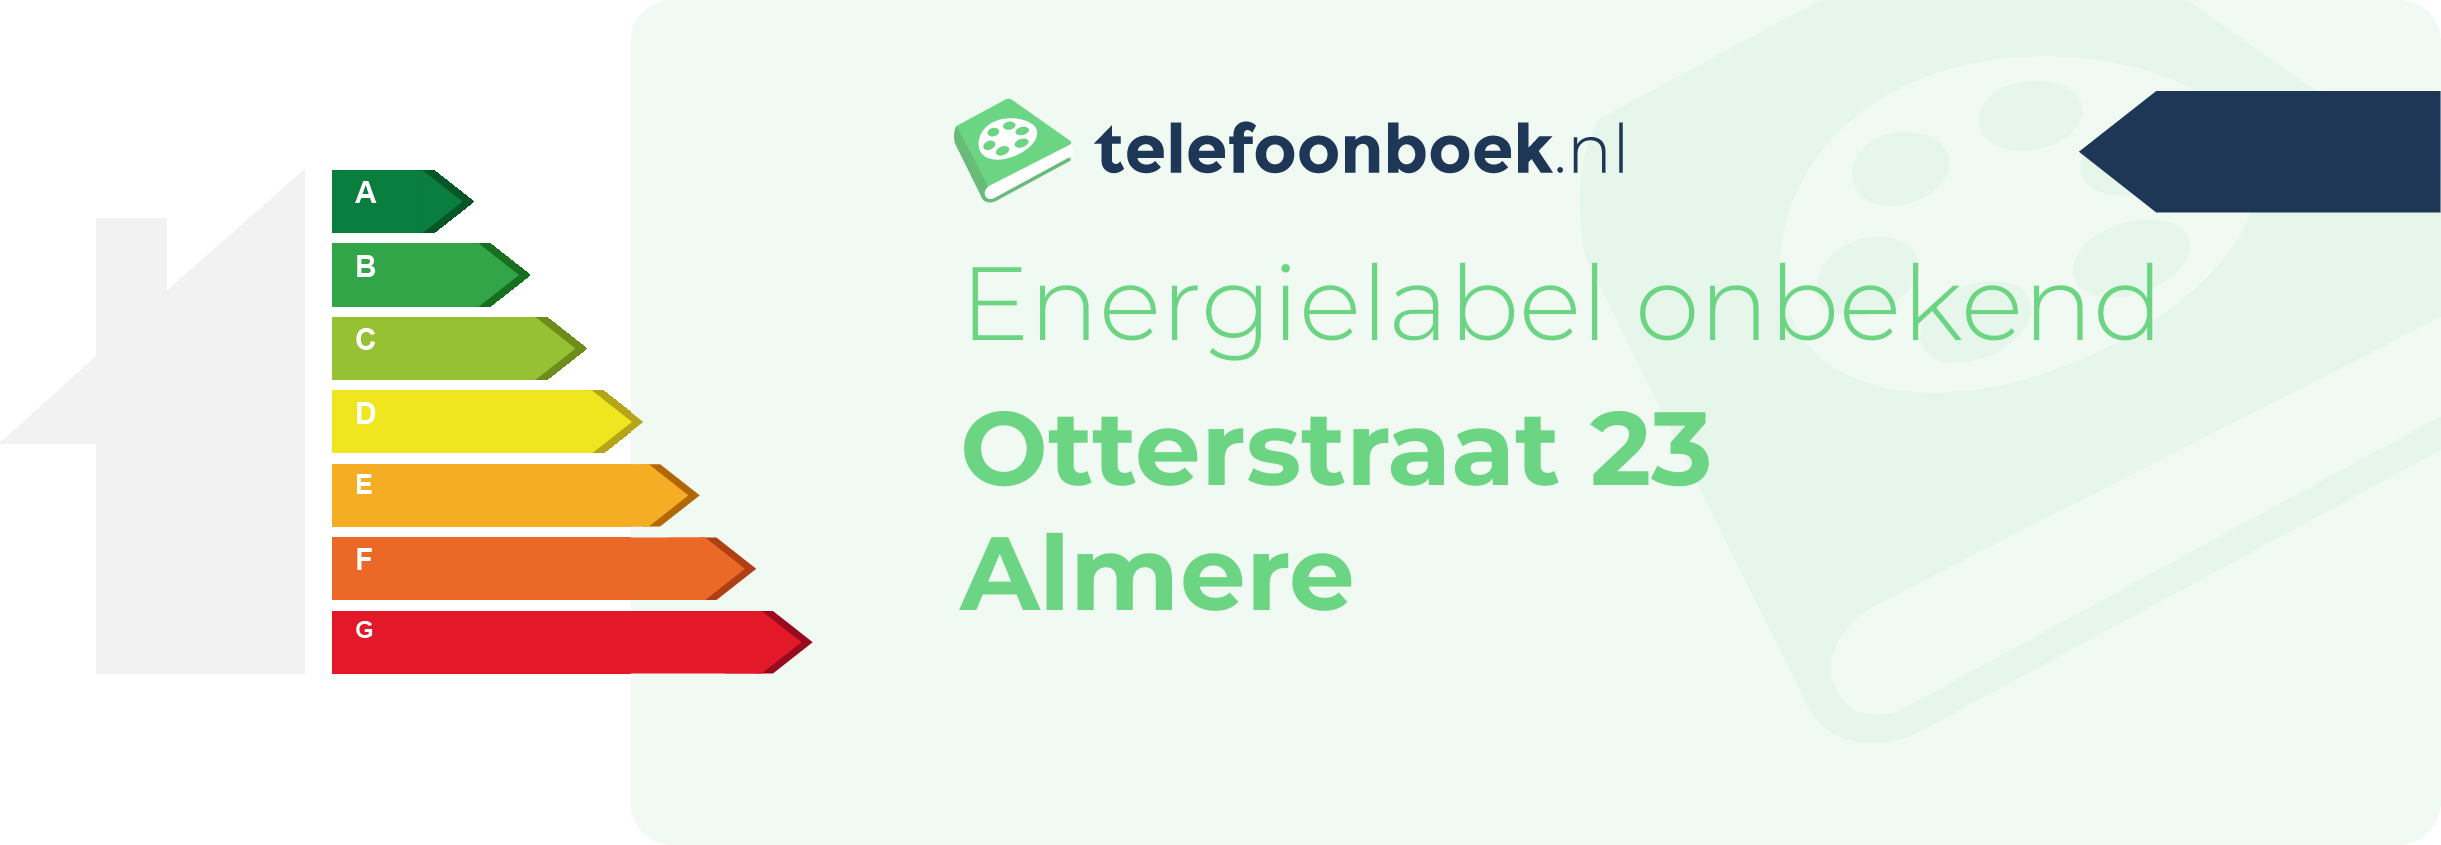 Energielabel Otterstraat 23 Almere